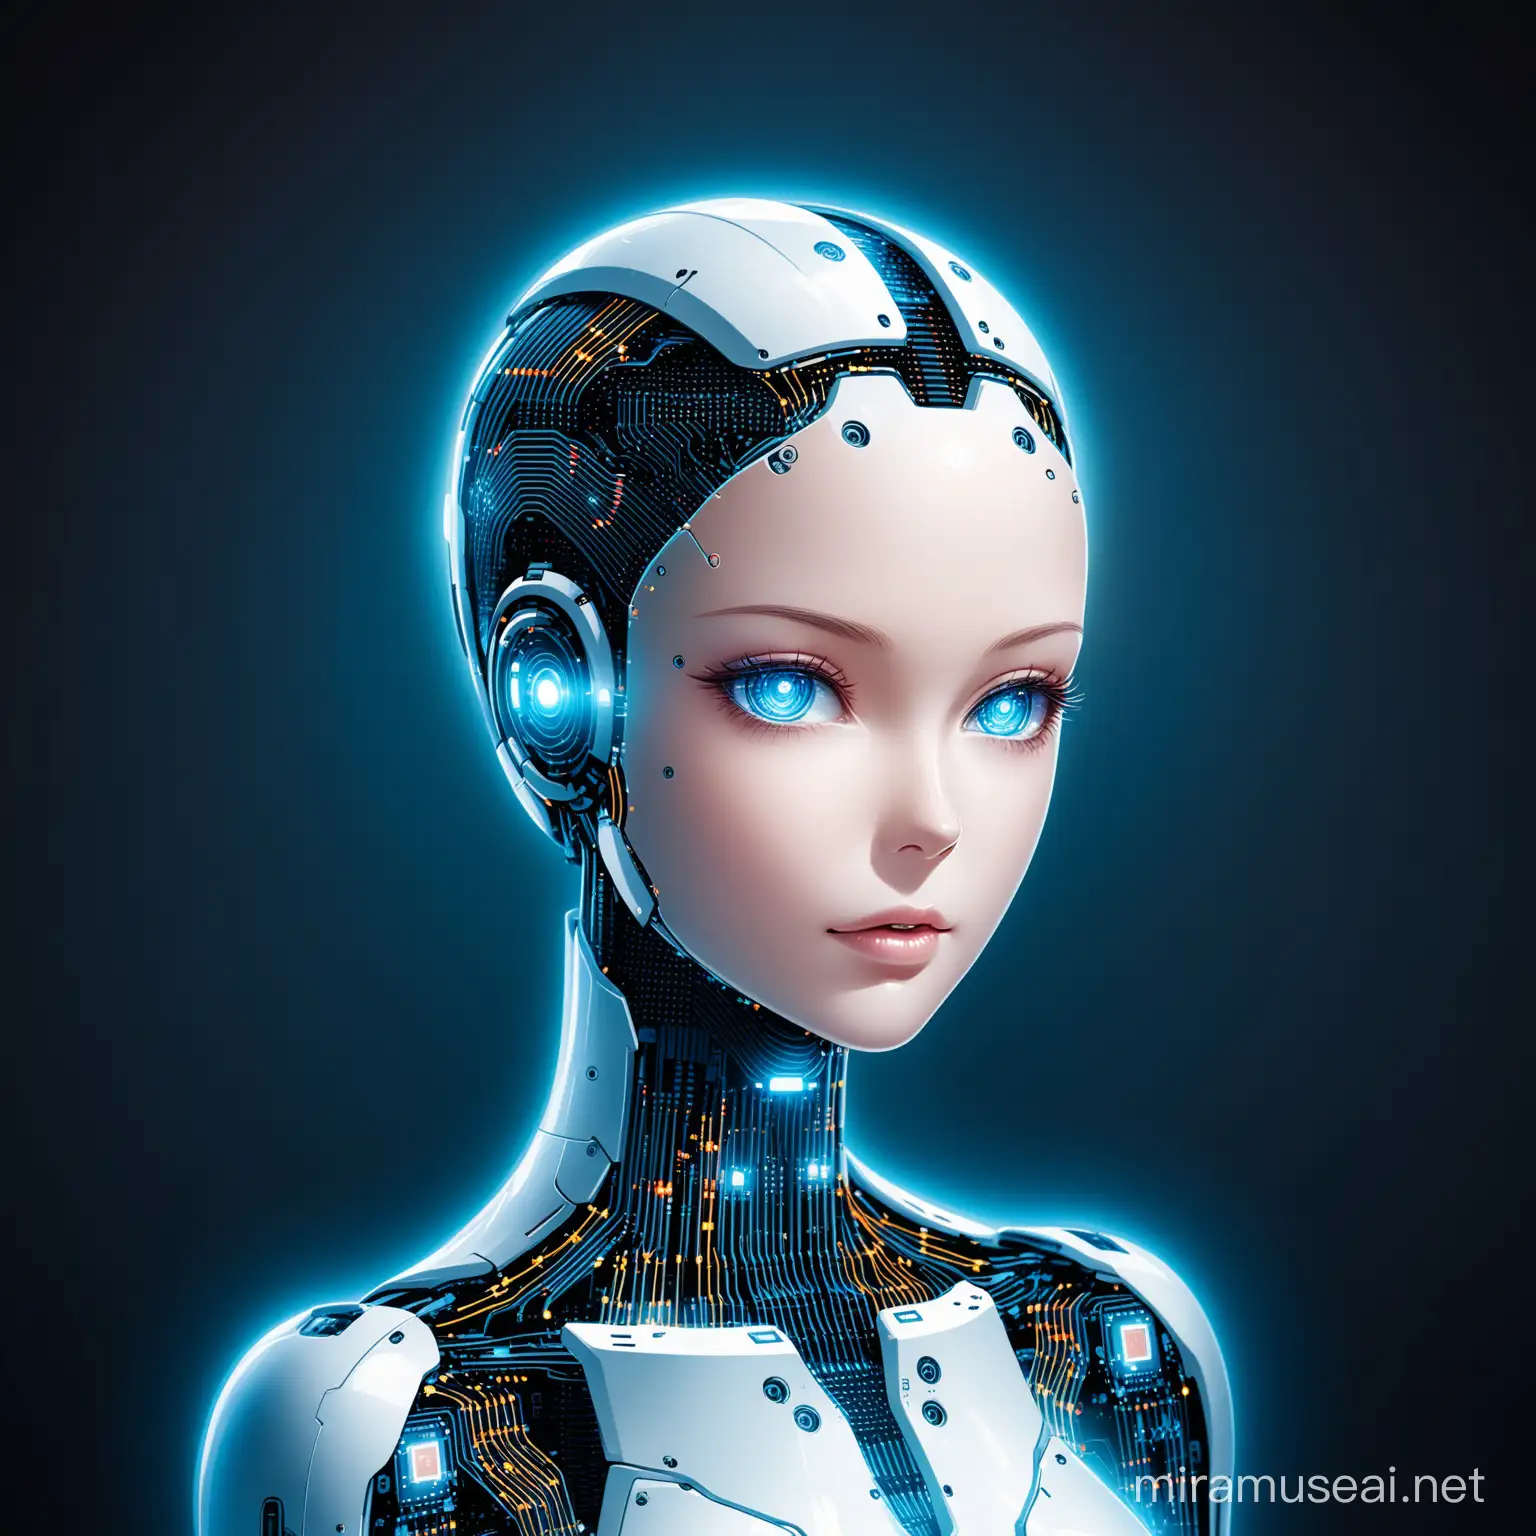 Futuristic AI Robots Interacting with Virtual Reality Environment